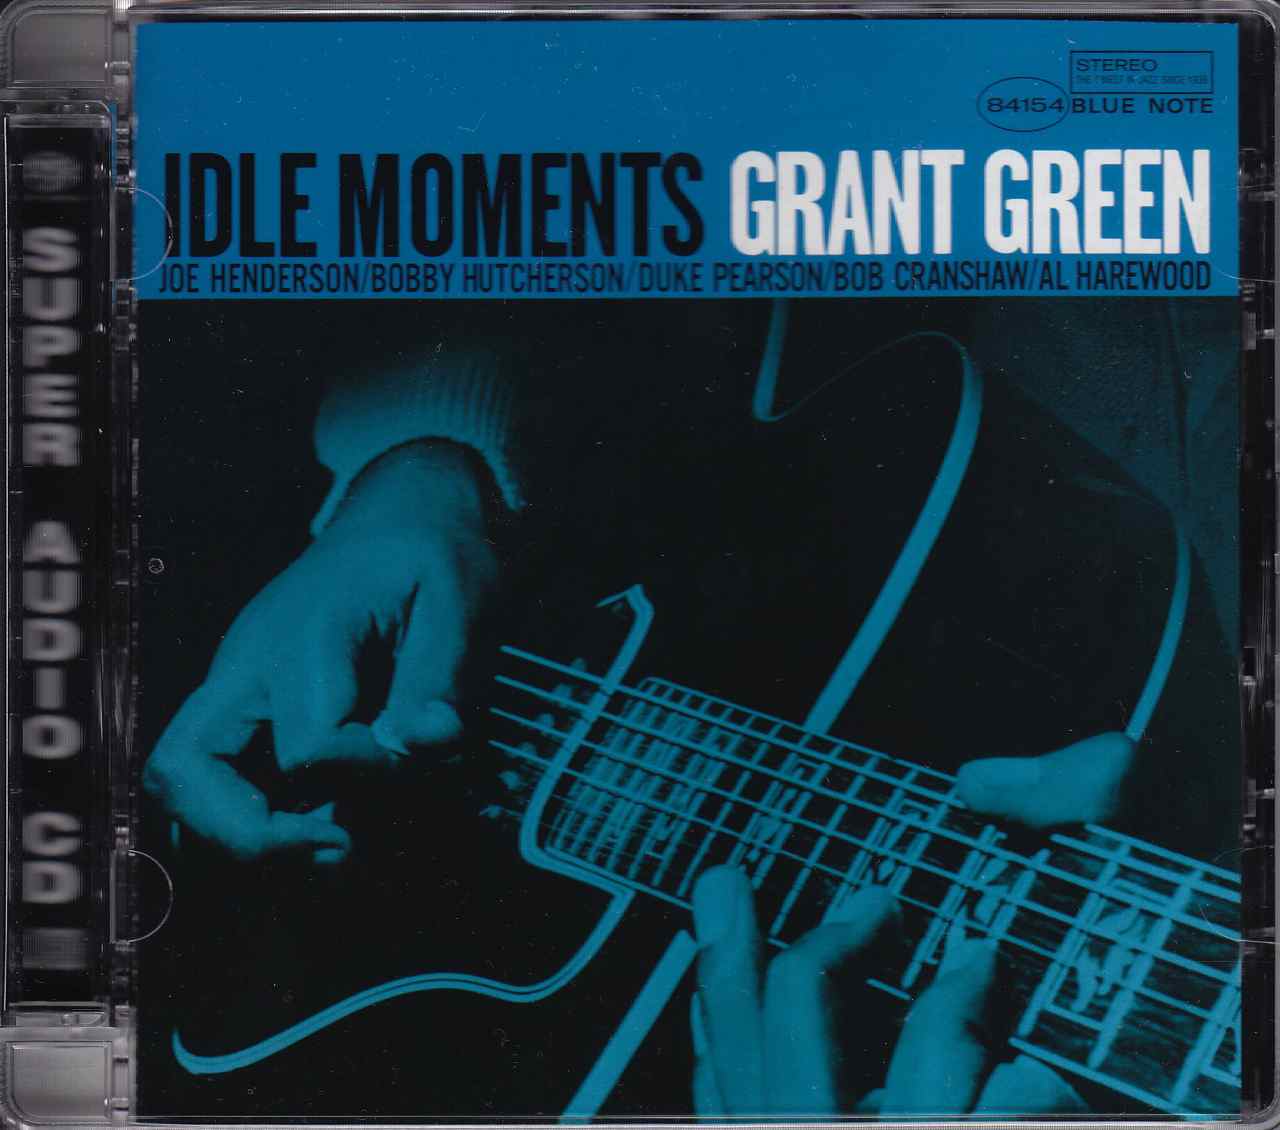 Grant Green – Idle Moments (1965) [Analogue Productions 2010] SACD ISO + Hi-Res FLAC